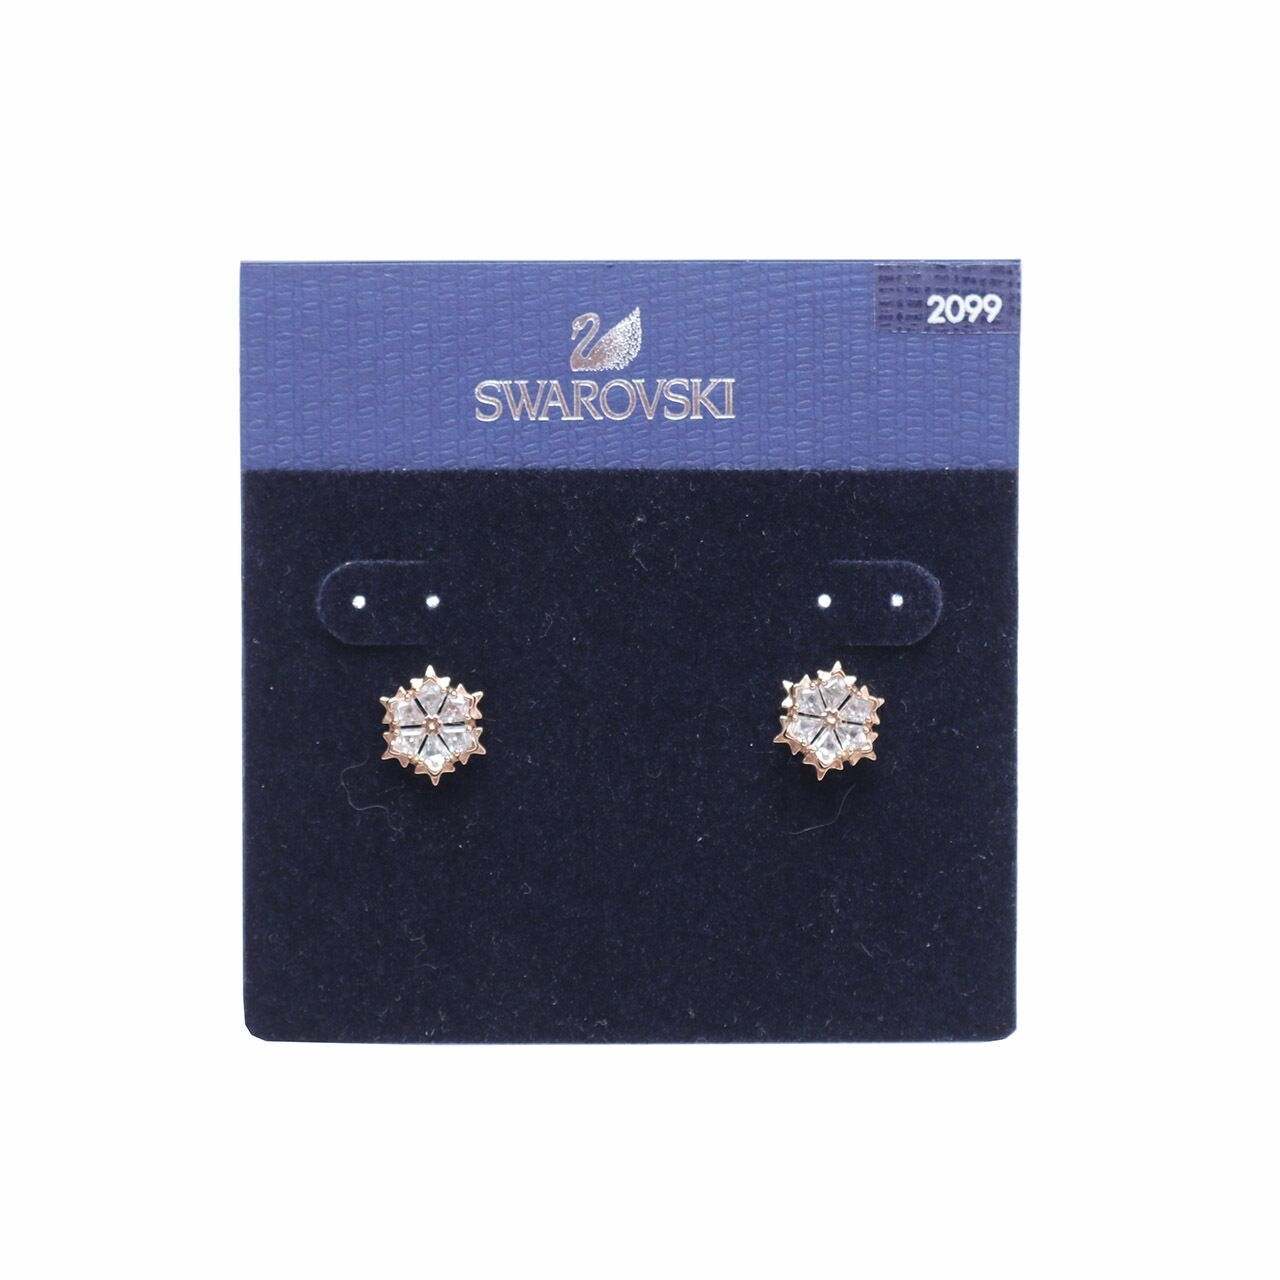 Swarovski Gold Magic Pierced Earrings Jewelry